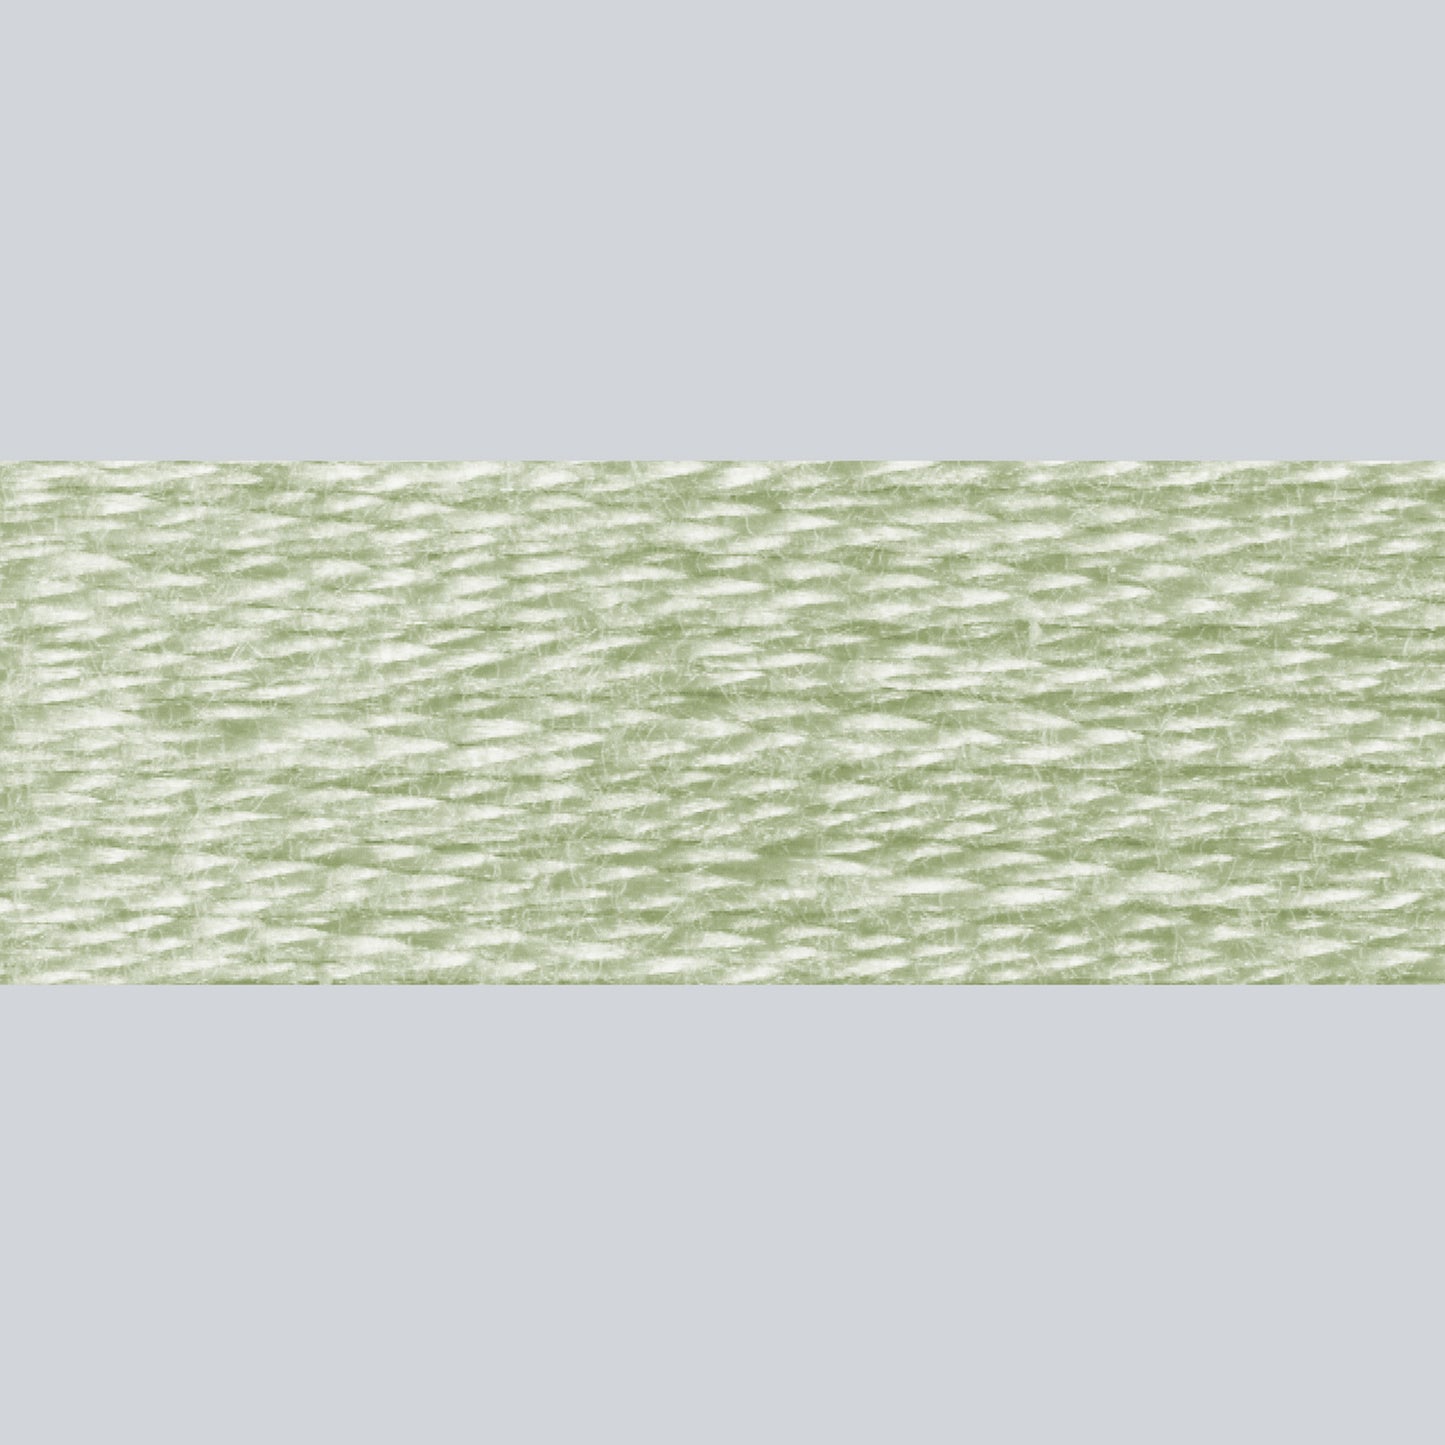 DMC Embroidery Floss - 524 Very Light Fern Green Alternative View #1